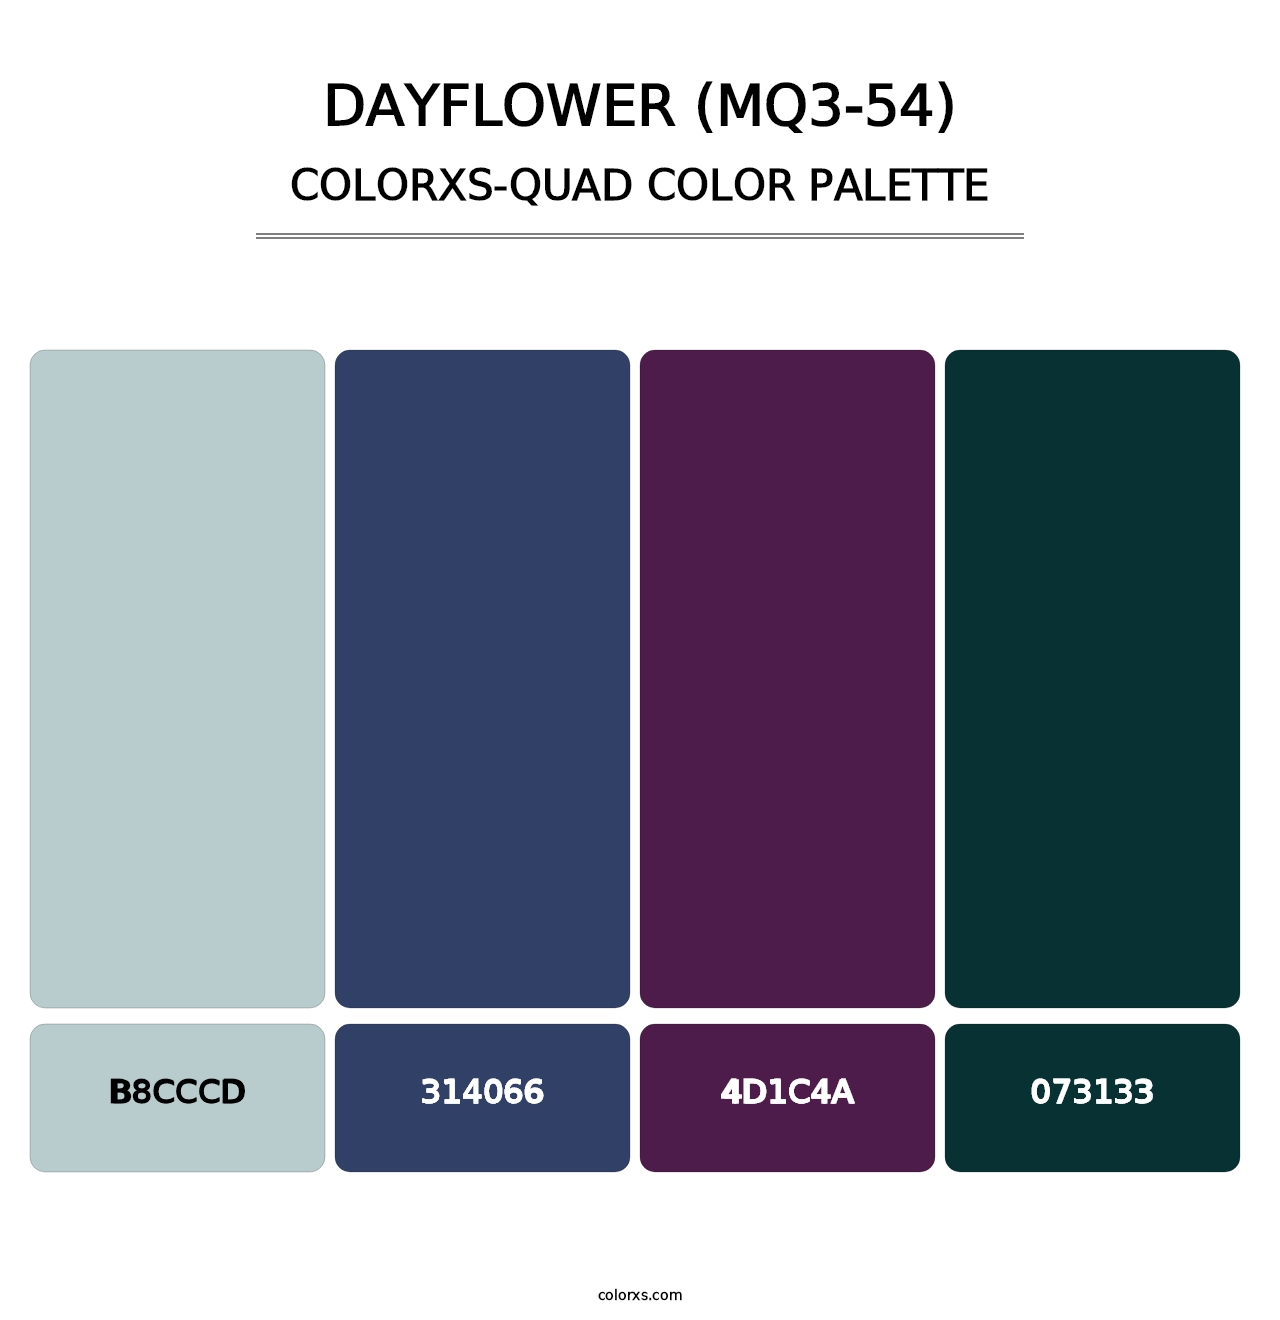 Dayflower (MQ3-54) - Colorxs Quad Palette